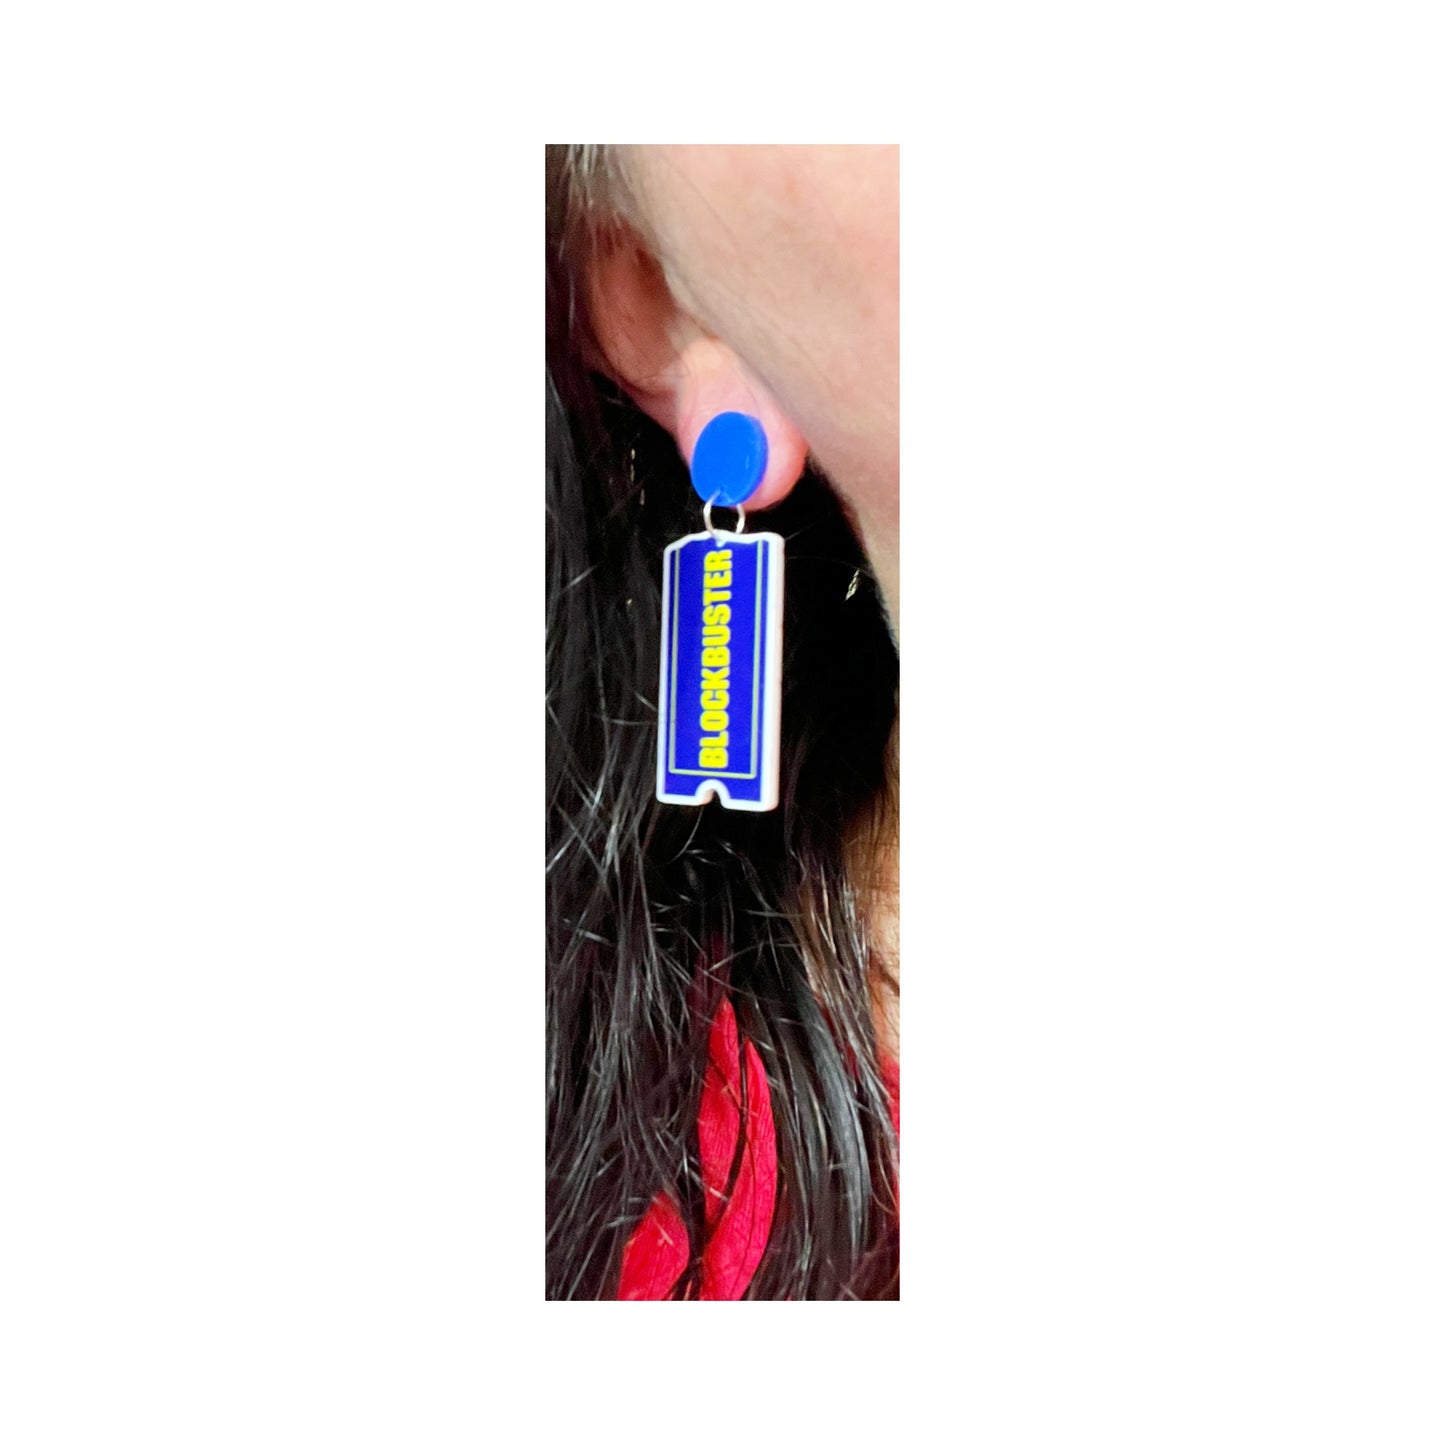 Blockbuster Inspired Acrylic Drop Earrings